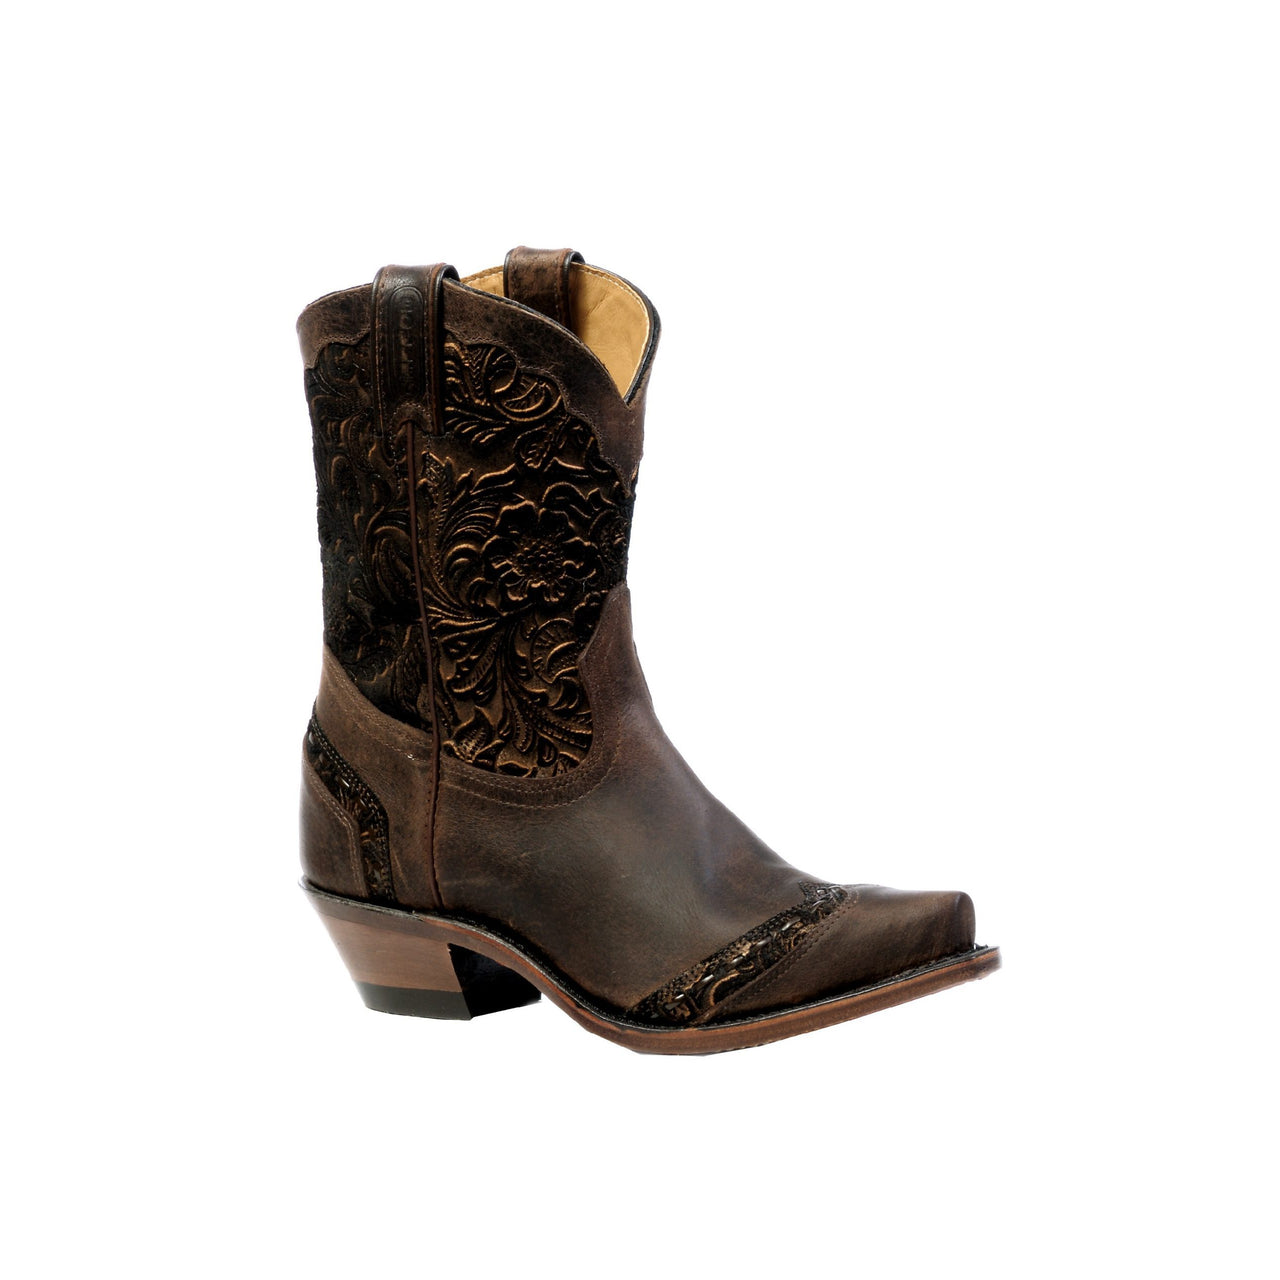 Boulet Women's Snip Toe Western Boots - Selvaggio Wood/Art Baroco Calf Split Tabac